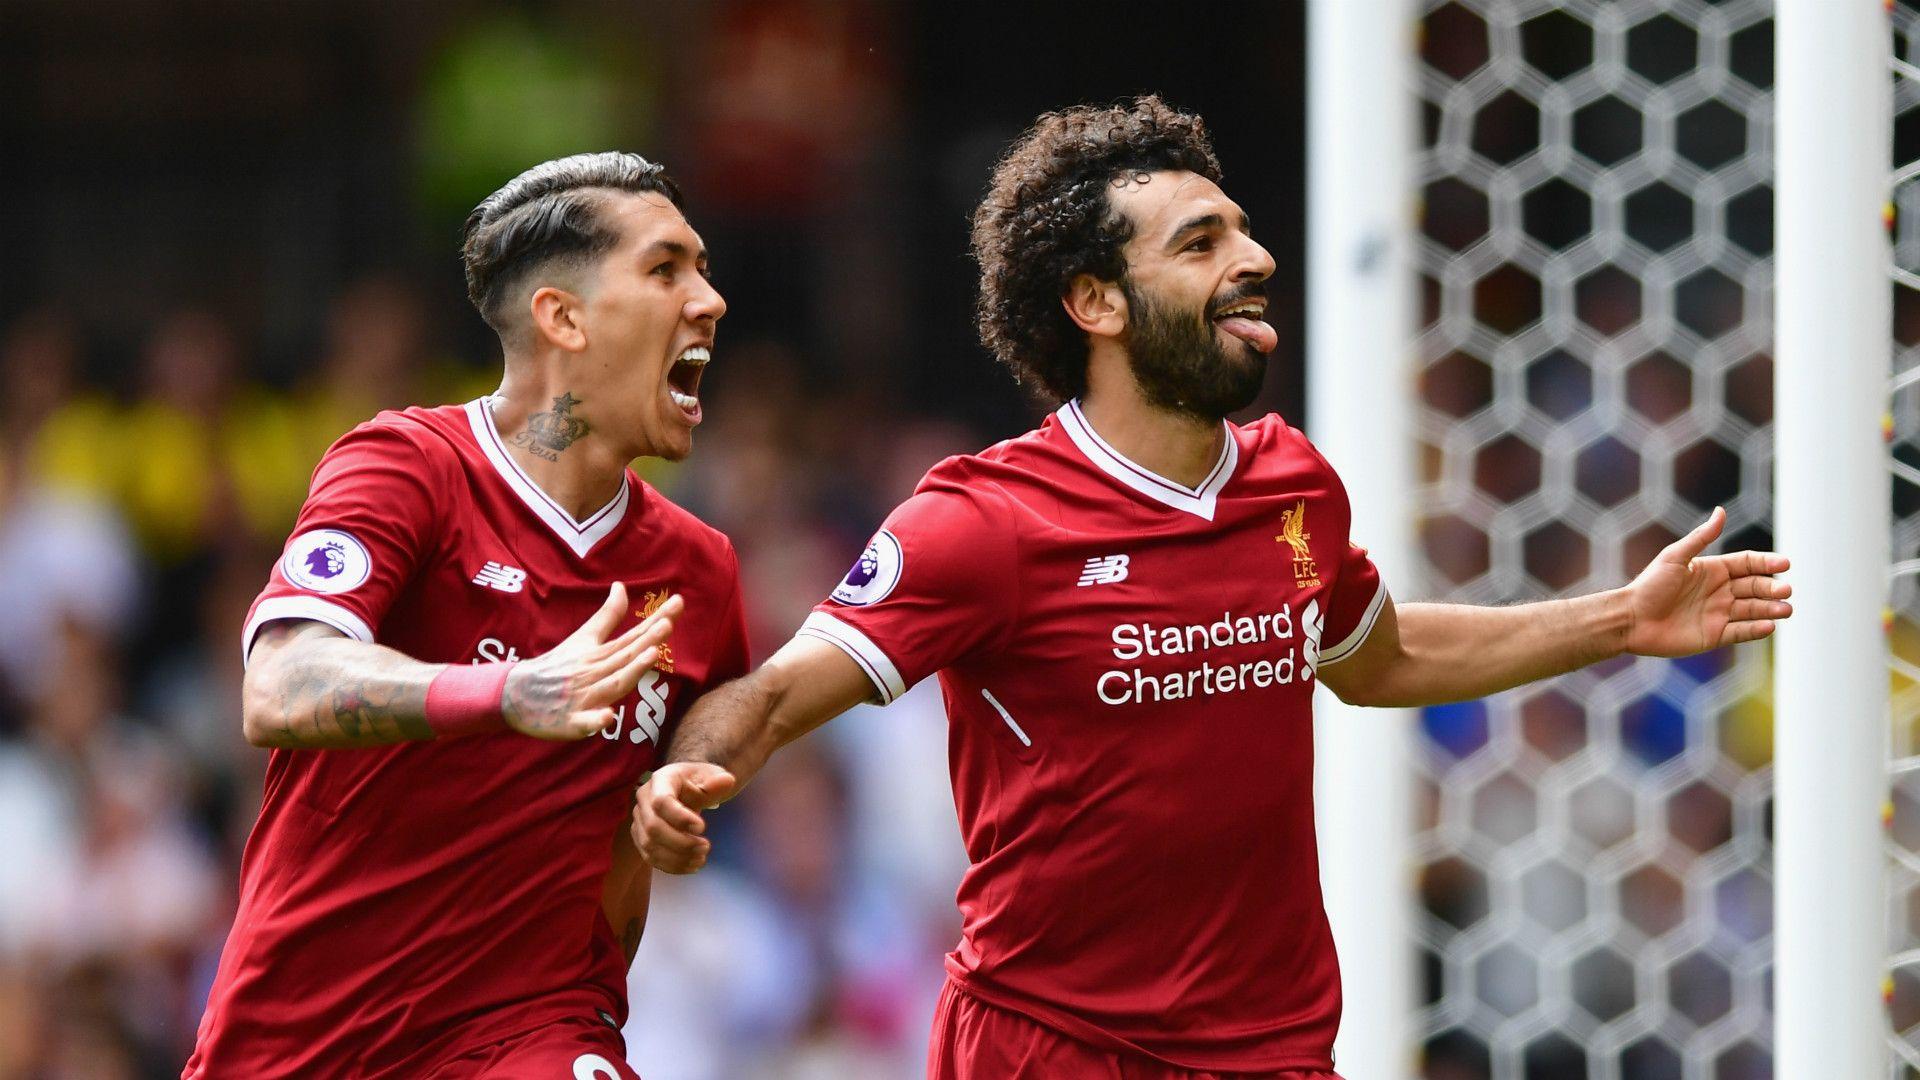 Sadio Mane, Mohamed Salah & Liverpool's attack will take Champions